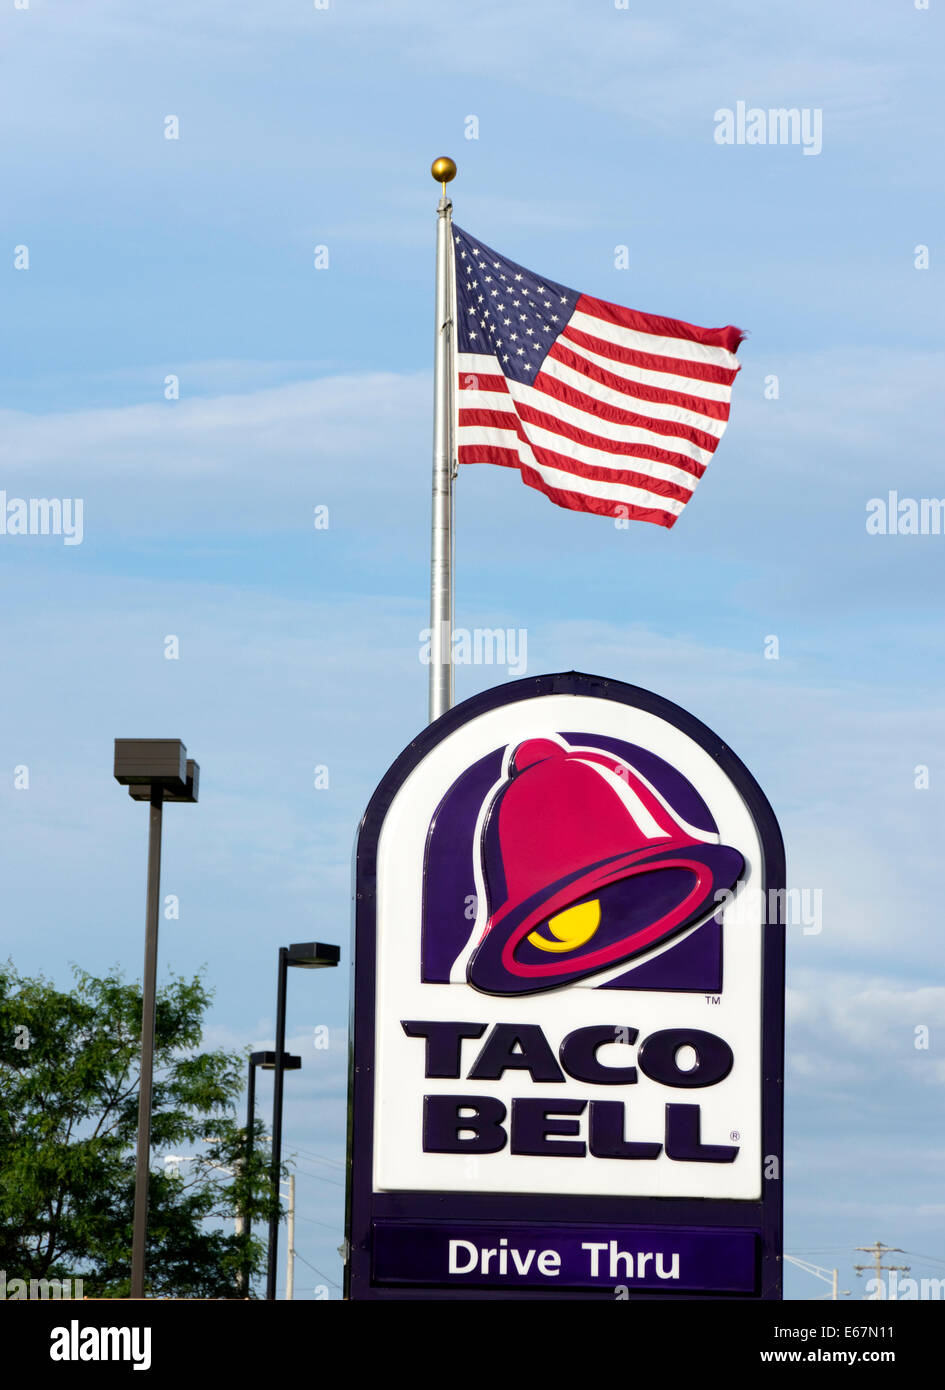 taco-bell-restaurant-sign-by-american-flag-E67N11.jpg